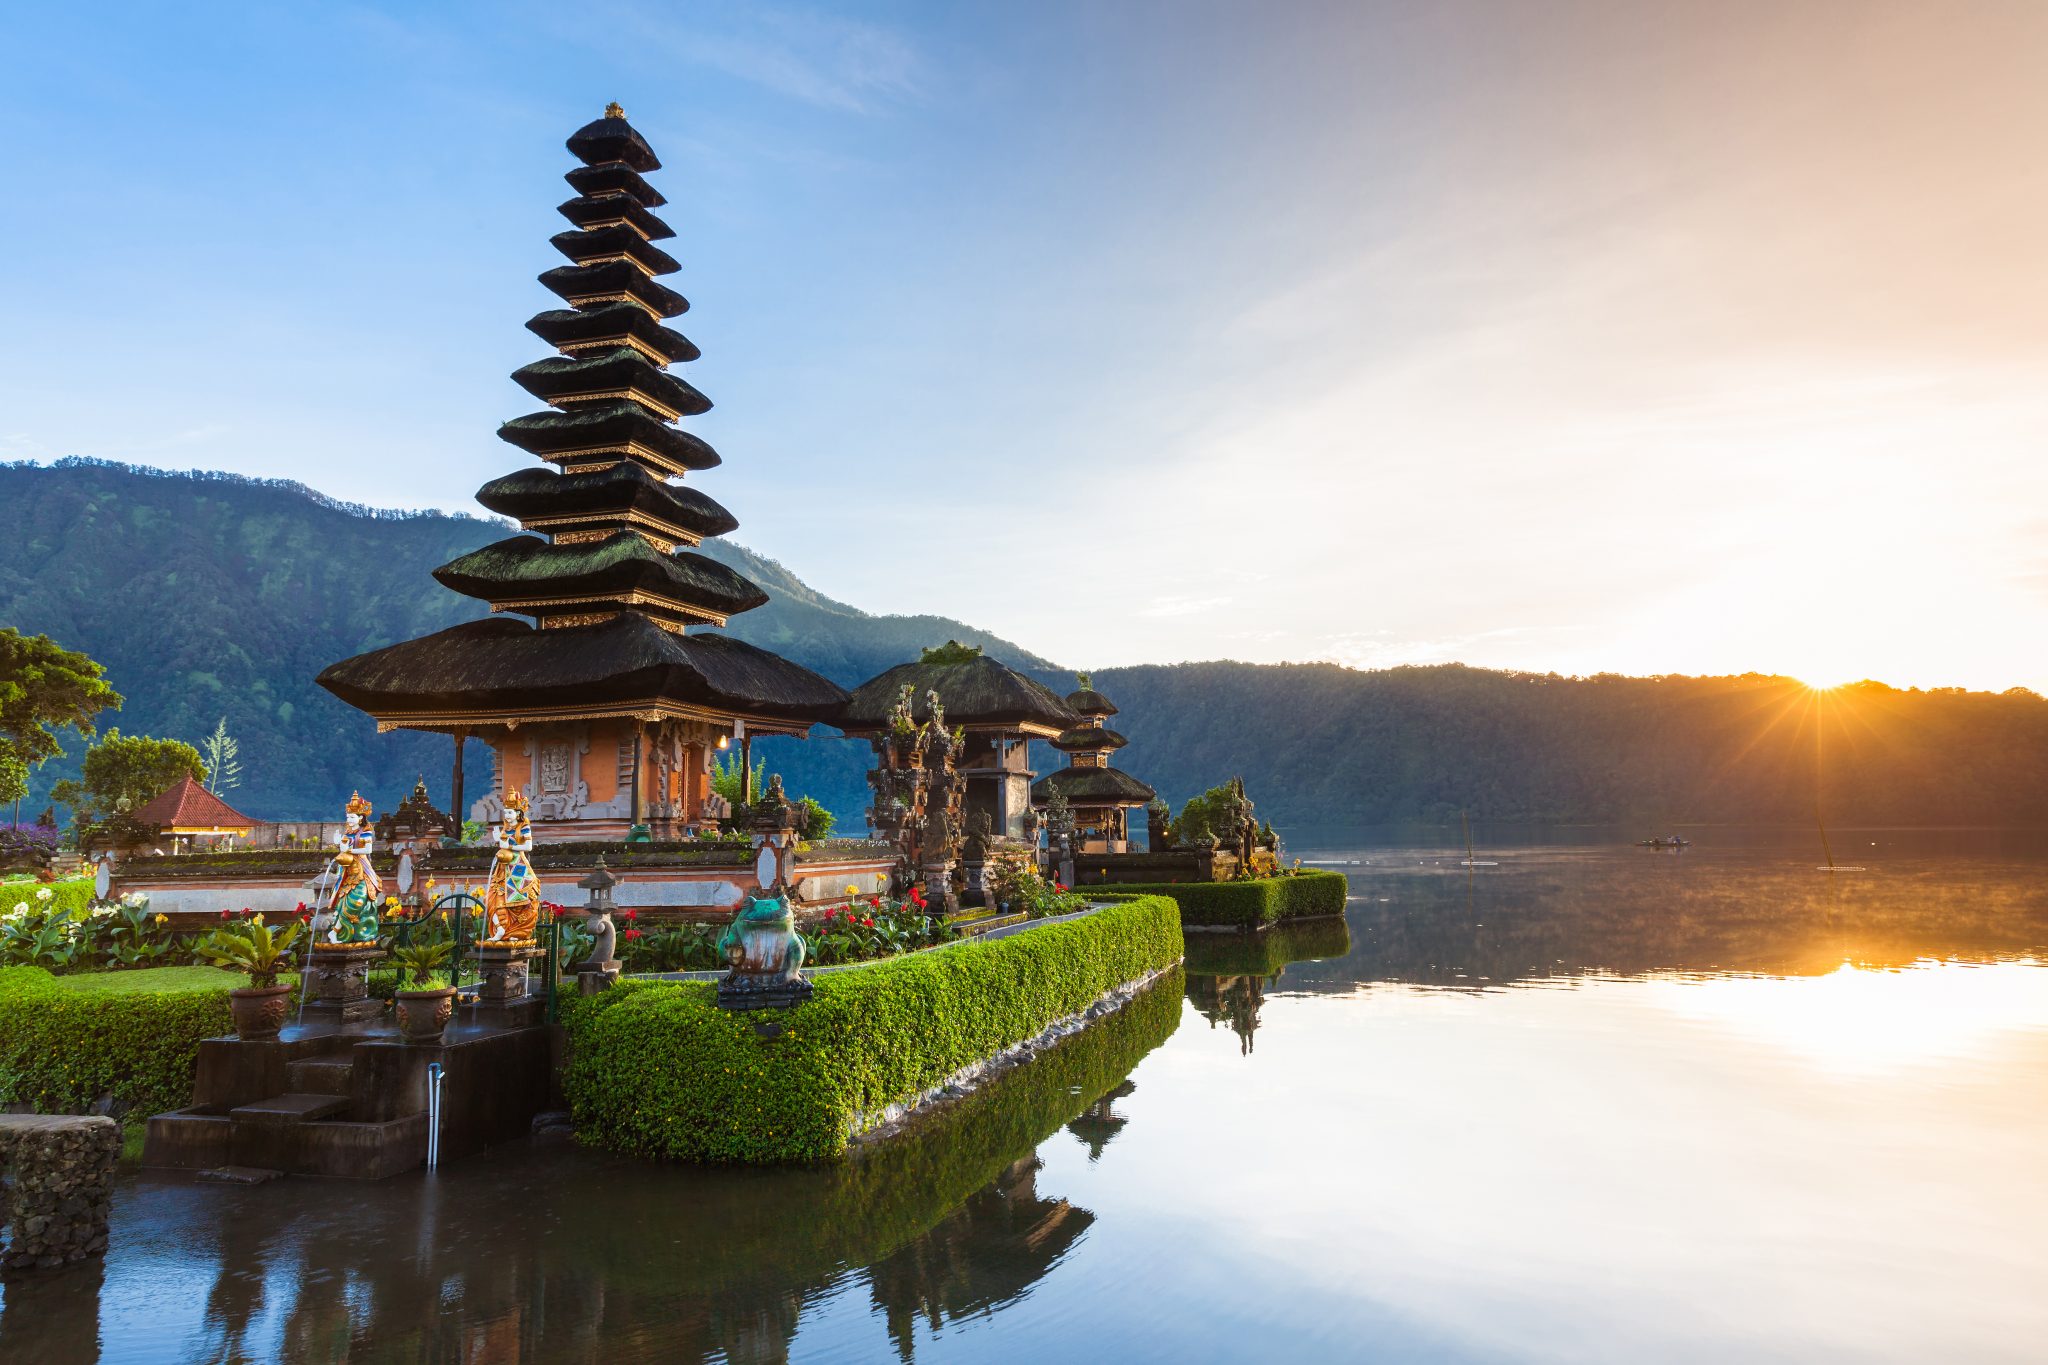 The Ulun Danu Beratan Temple was built in 1633 CE and dedicated to the Balinese lake goddess Dewi Danu. Visit SoutheastAsia.